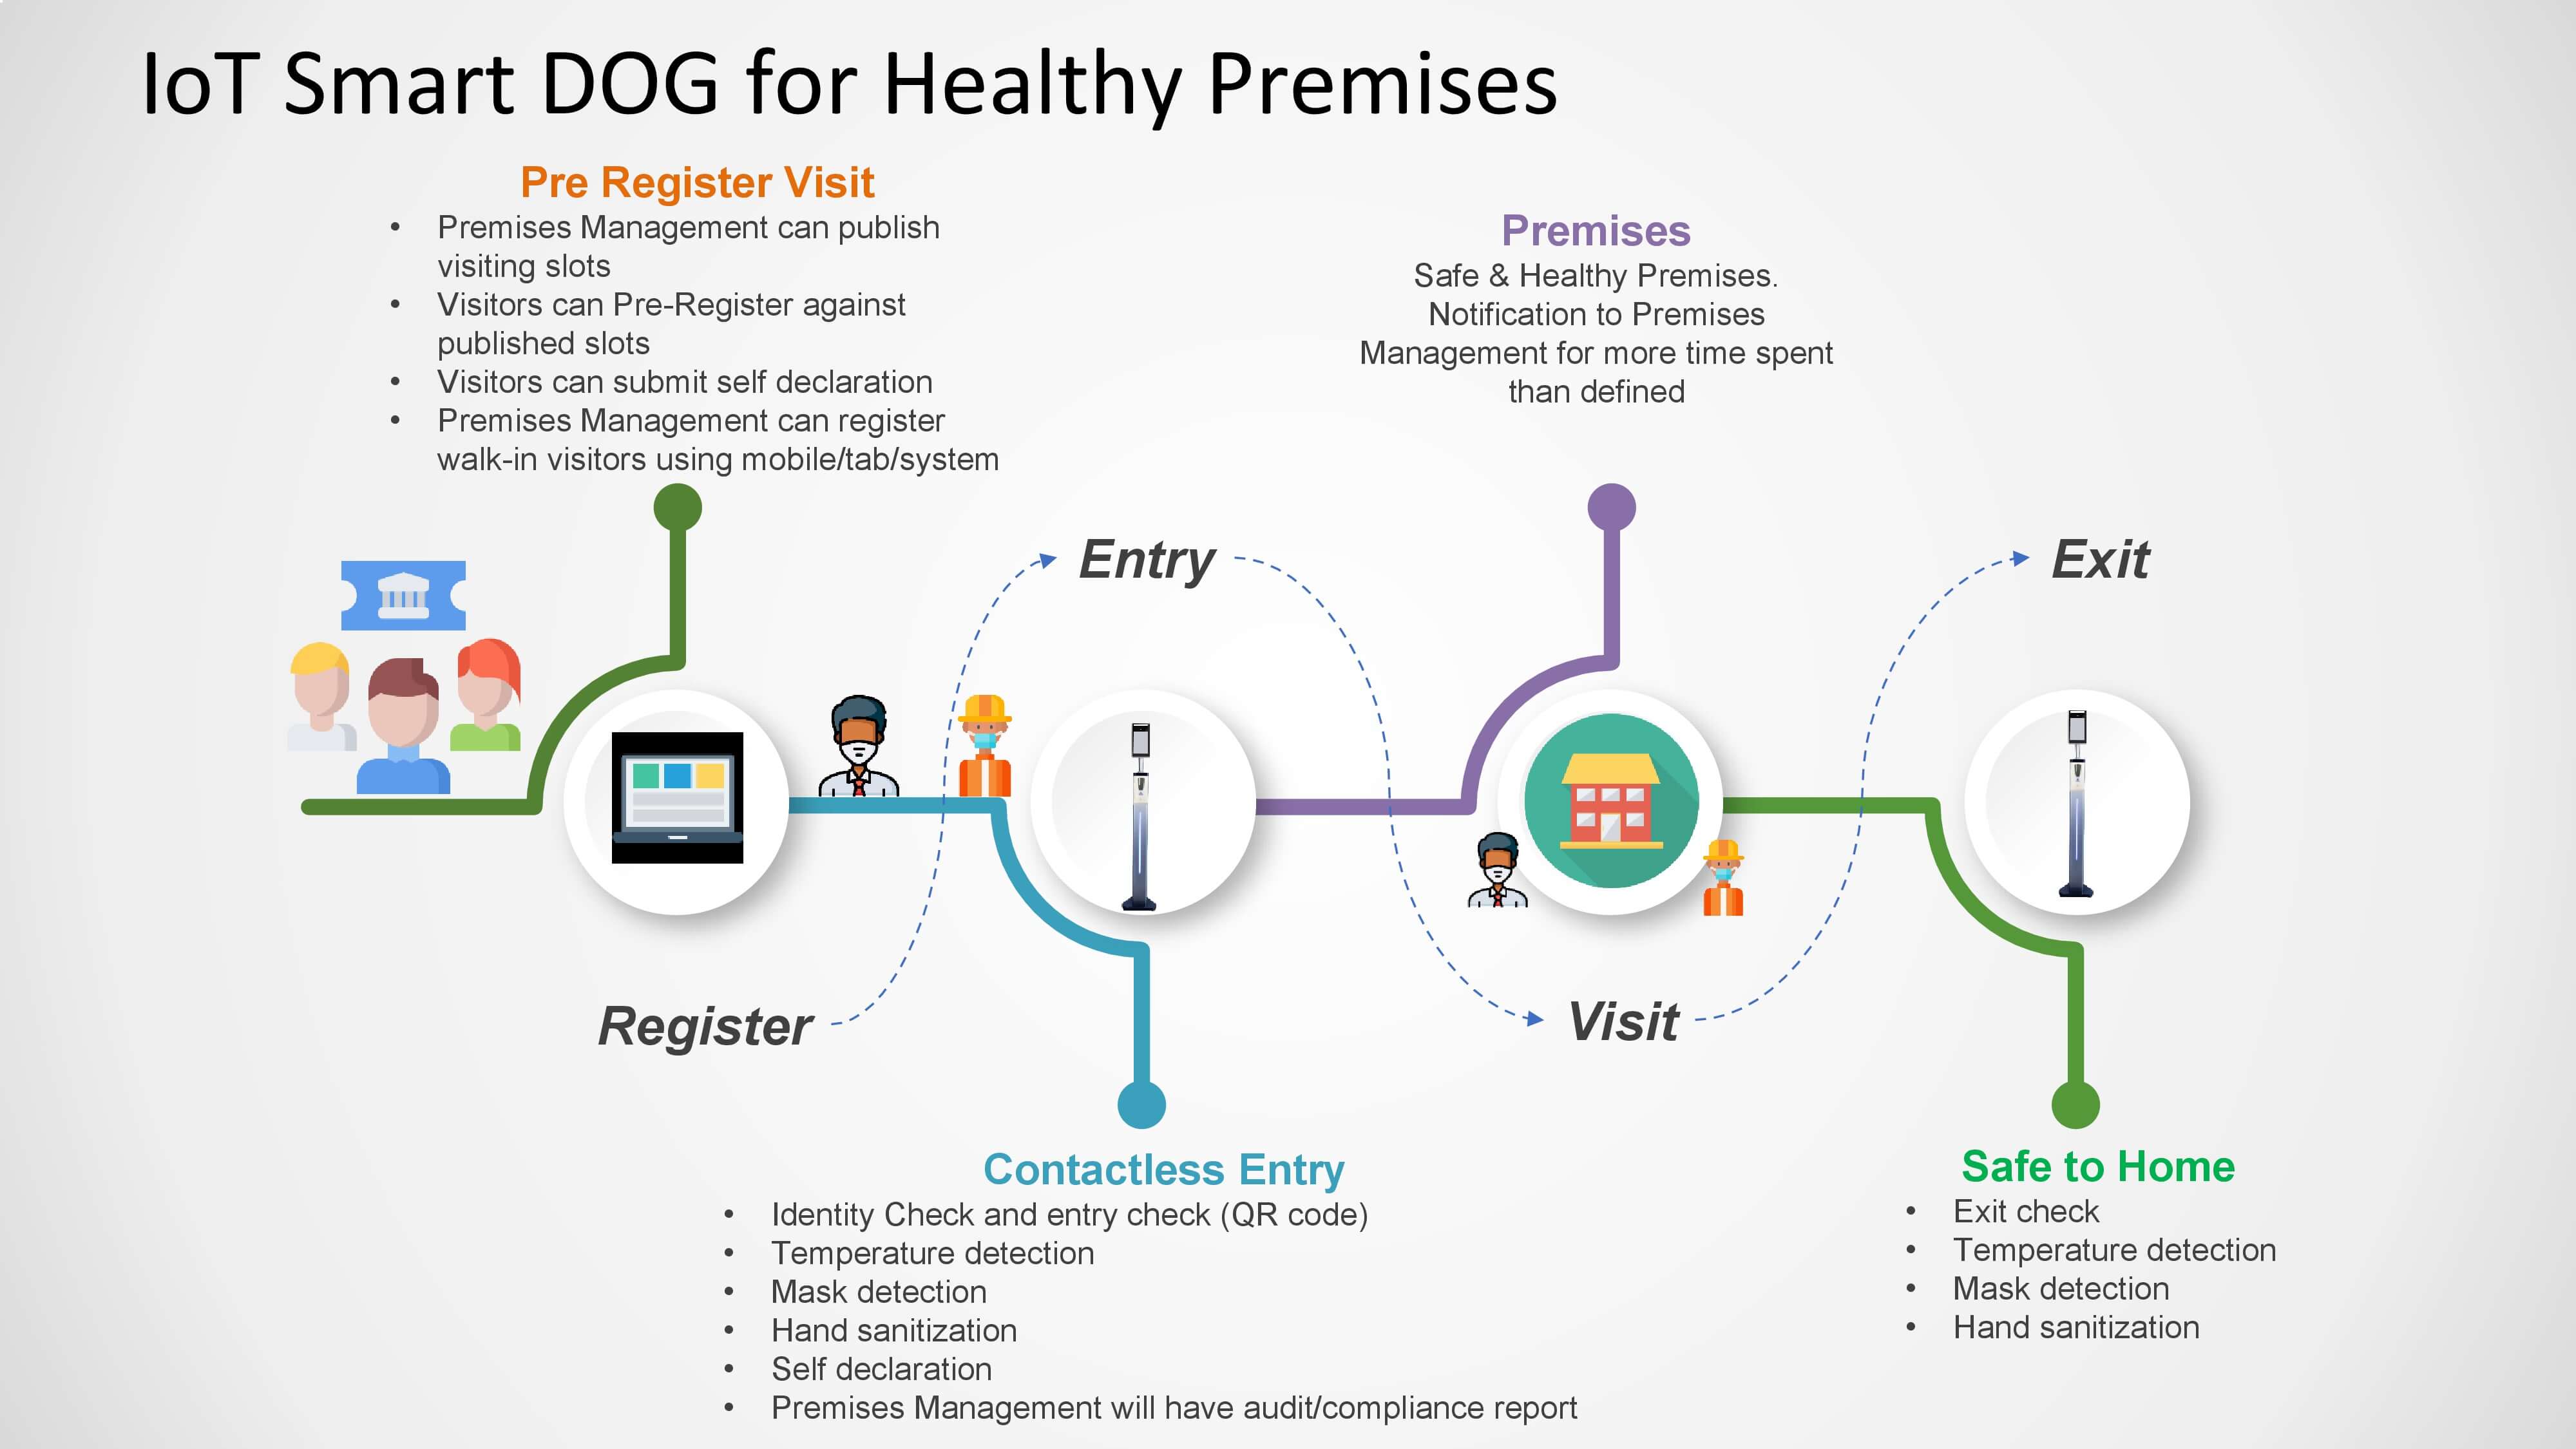 DyoCense IoT smart dog for Healthy Premises poster